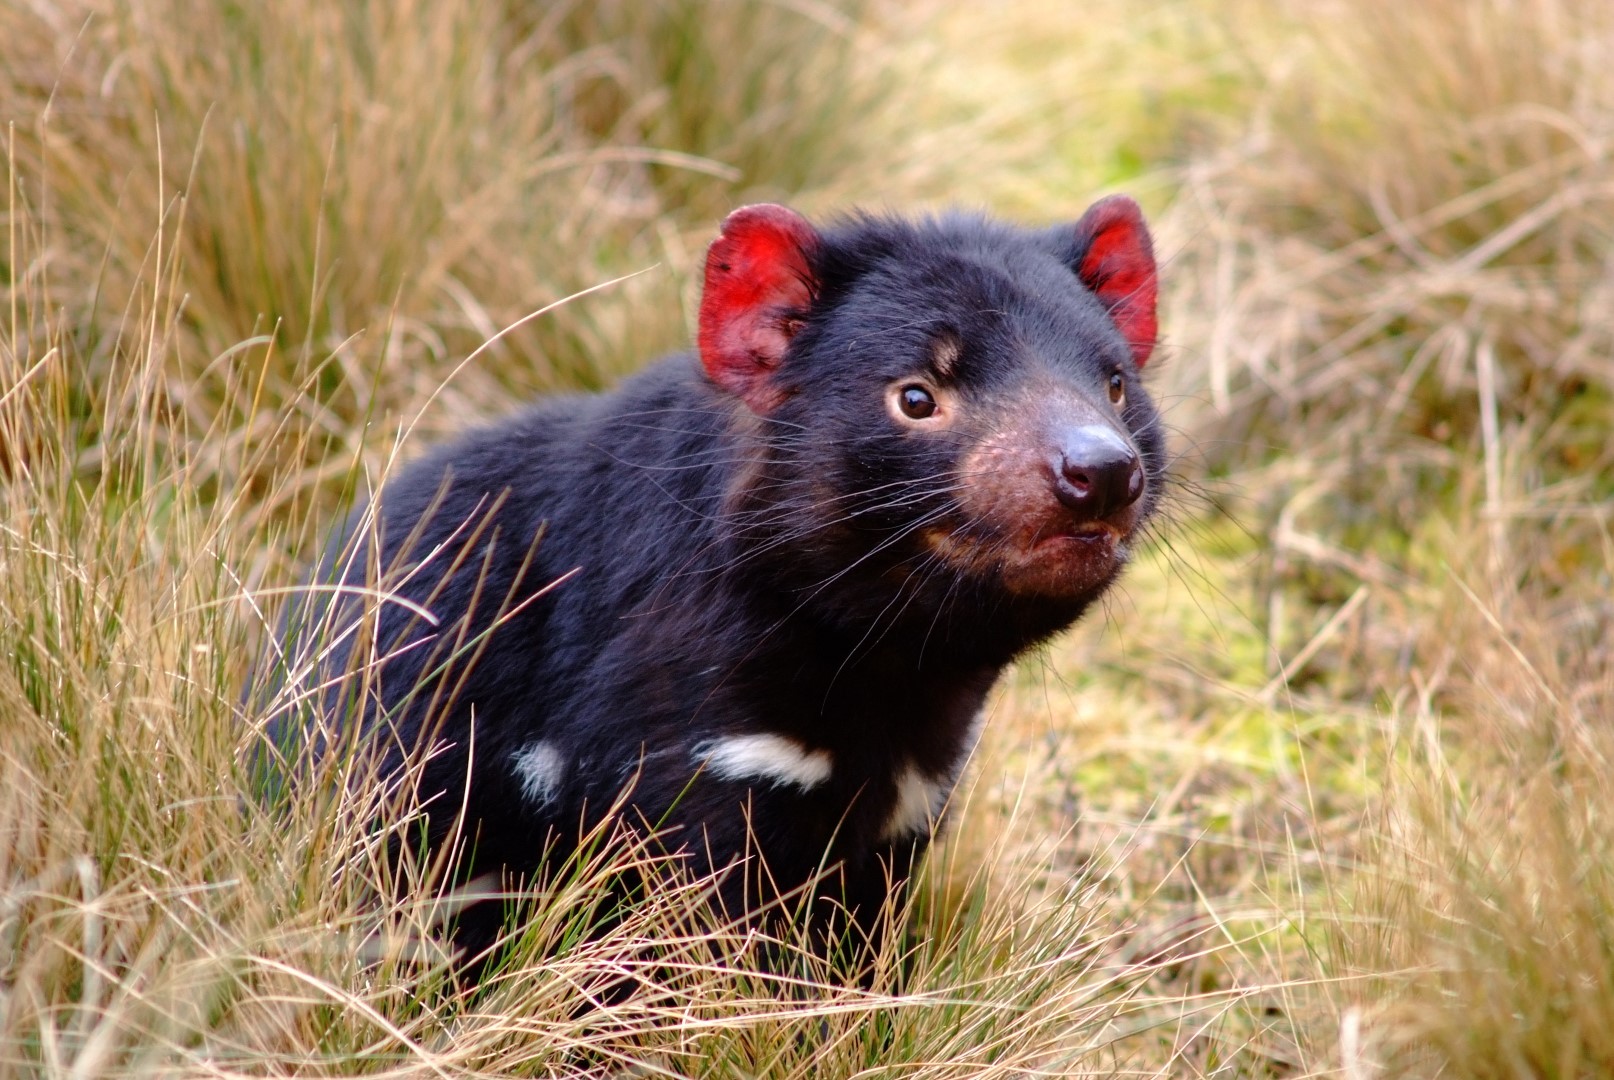 Der Tasmanische Teufel. Photo Credit: Tourism Tasmania & Masaaki Aihara